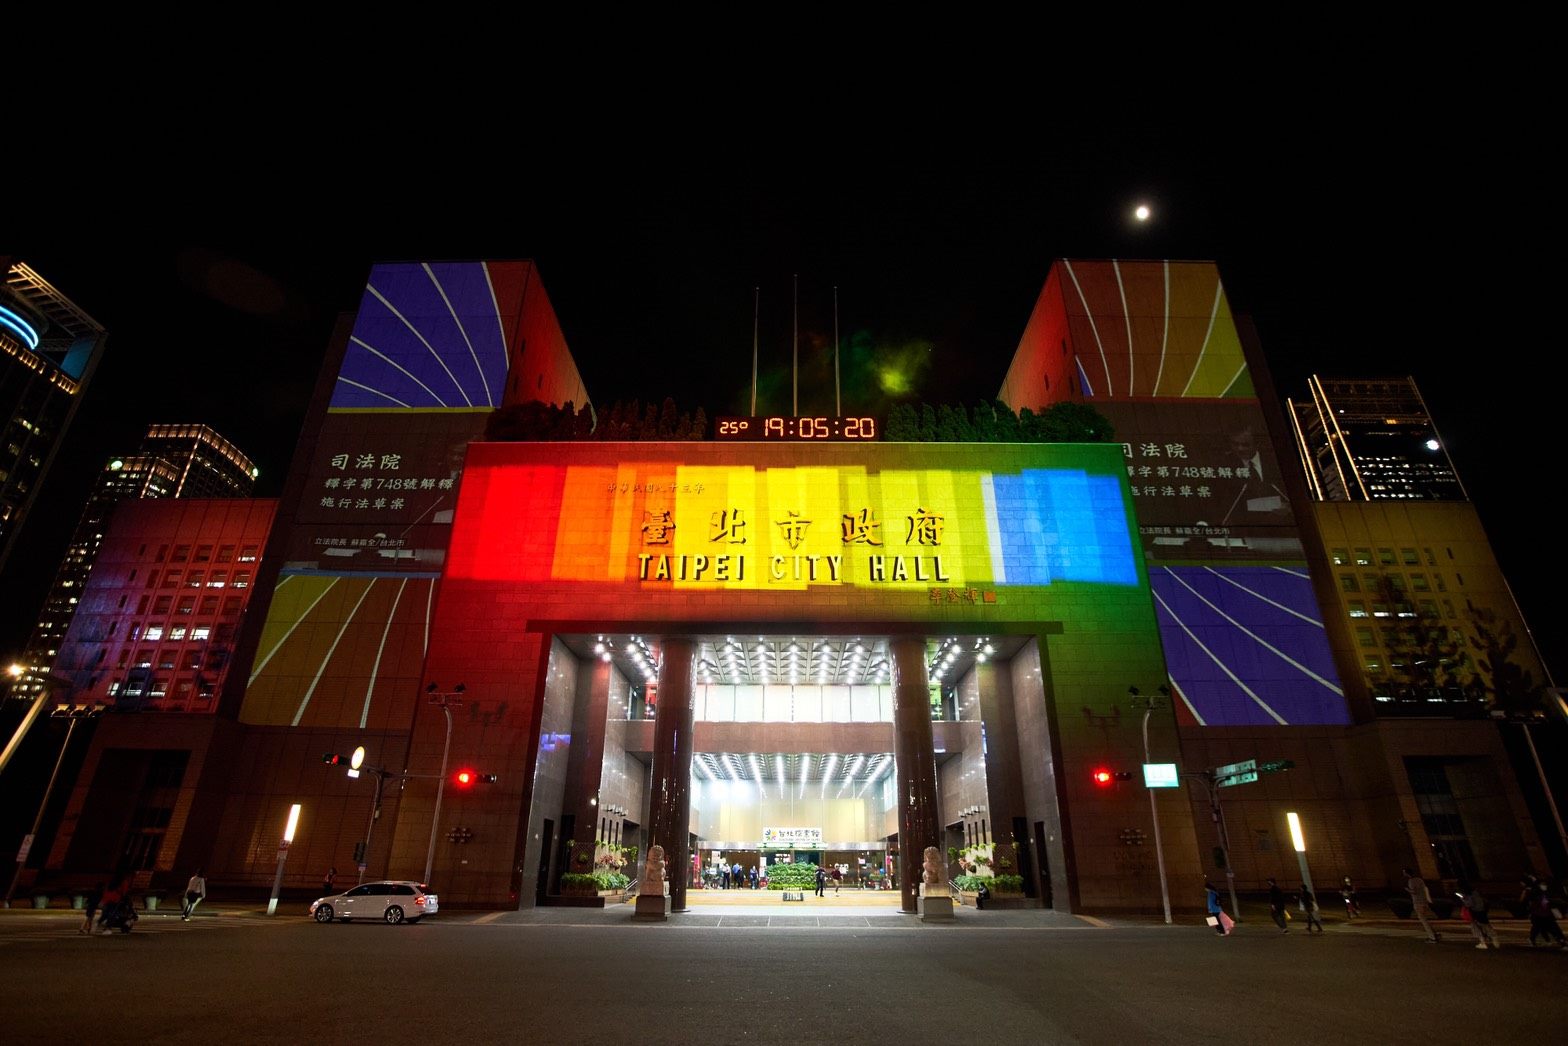 「Color Taipei彩虹燈光投影秀」自10月29日-31日於台北市府前精彩演出，歡迎有興趣的朋友前來觀賞